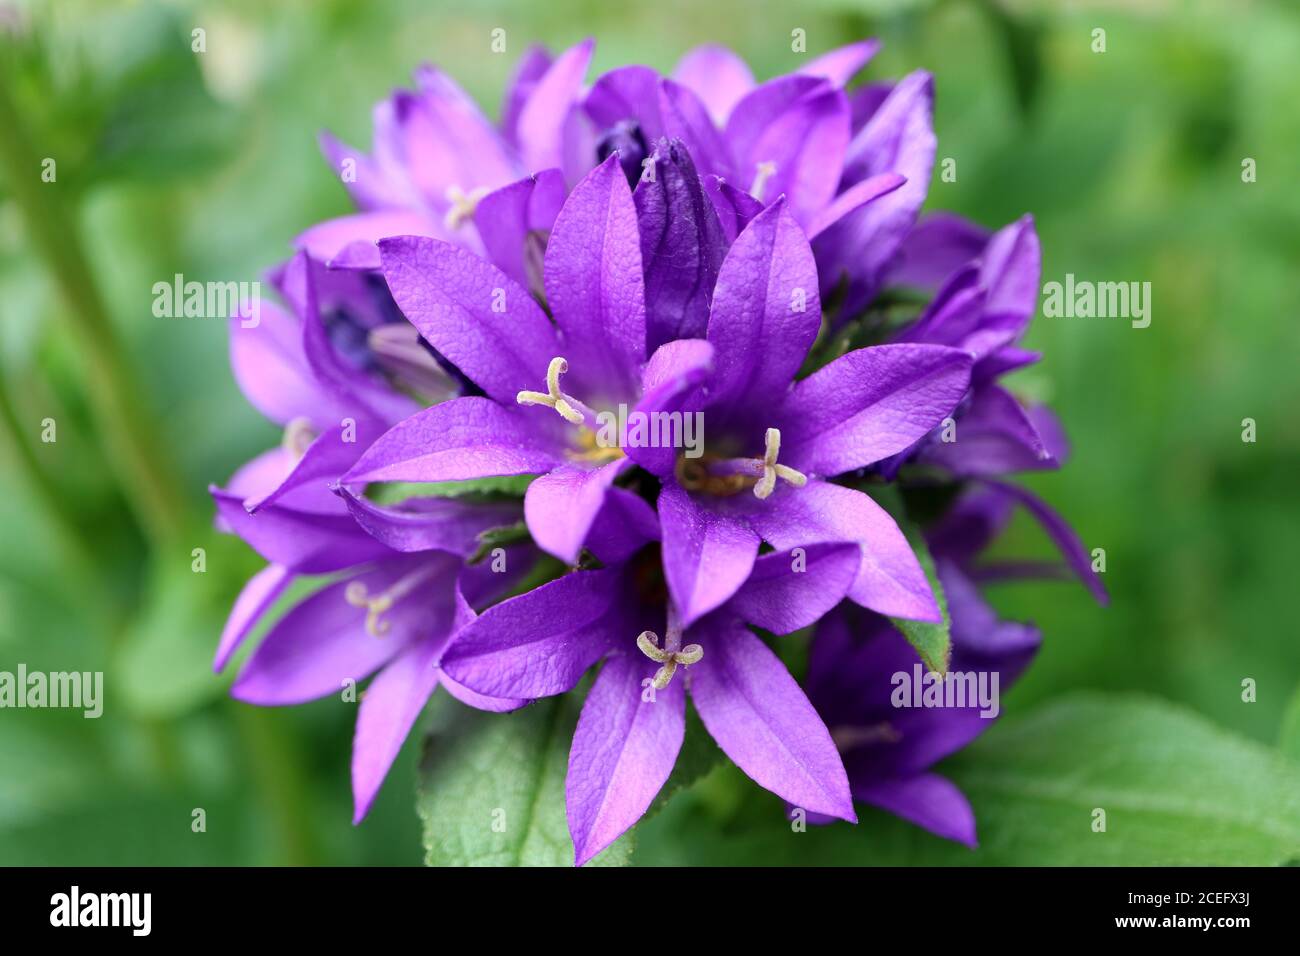 Purple Bell flowers in the garden, Purple Campanula Glomerata,Purple Bell flowers macro,Beauty in nature,stock image Stock Photo